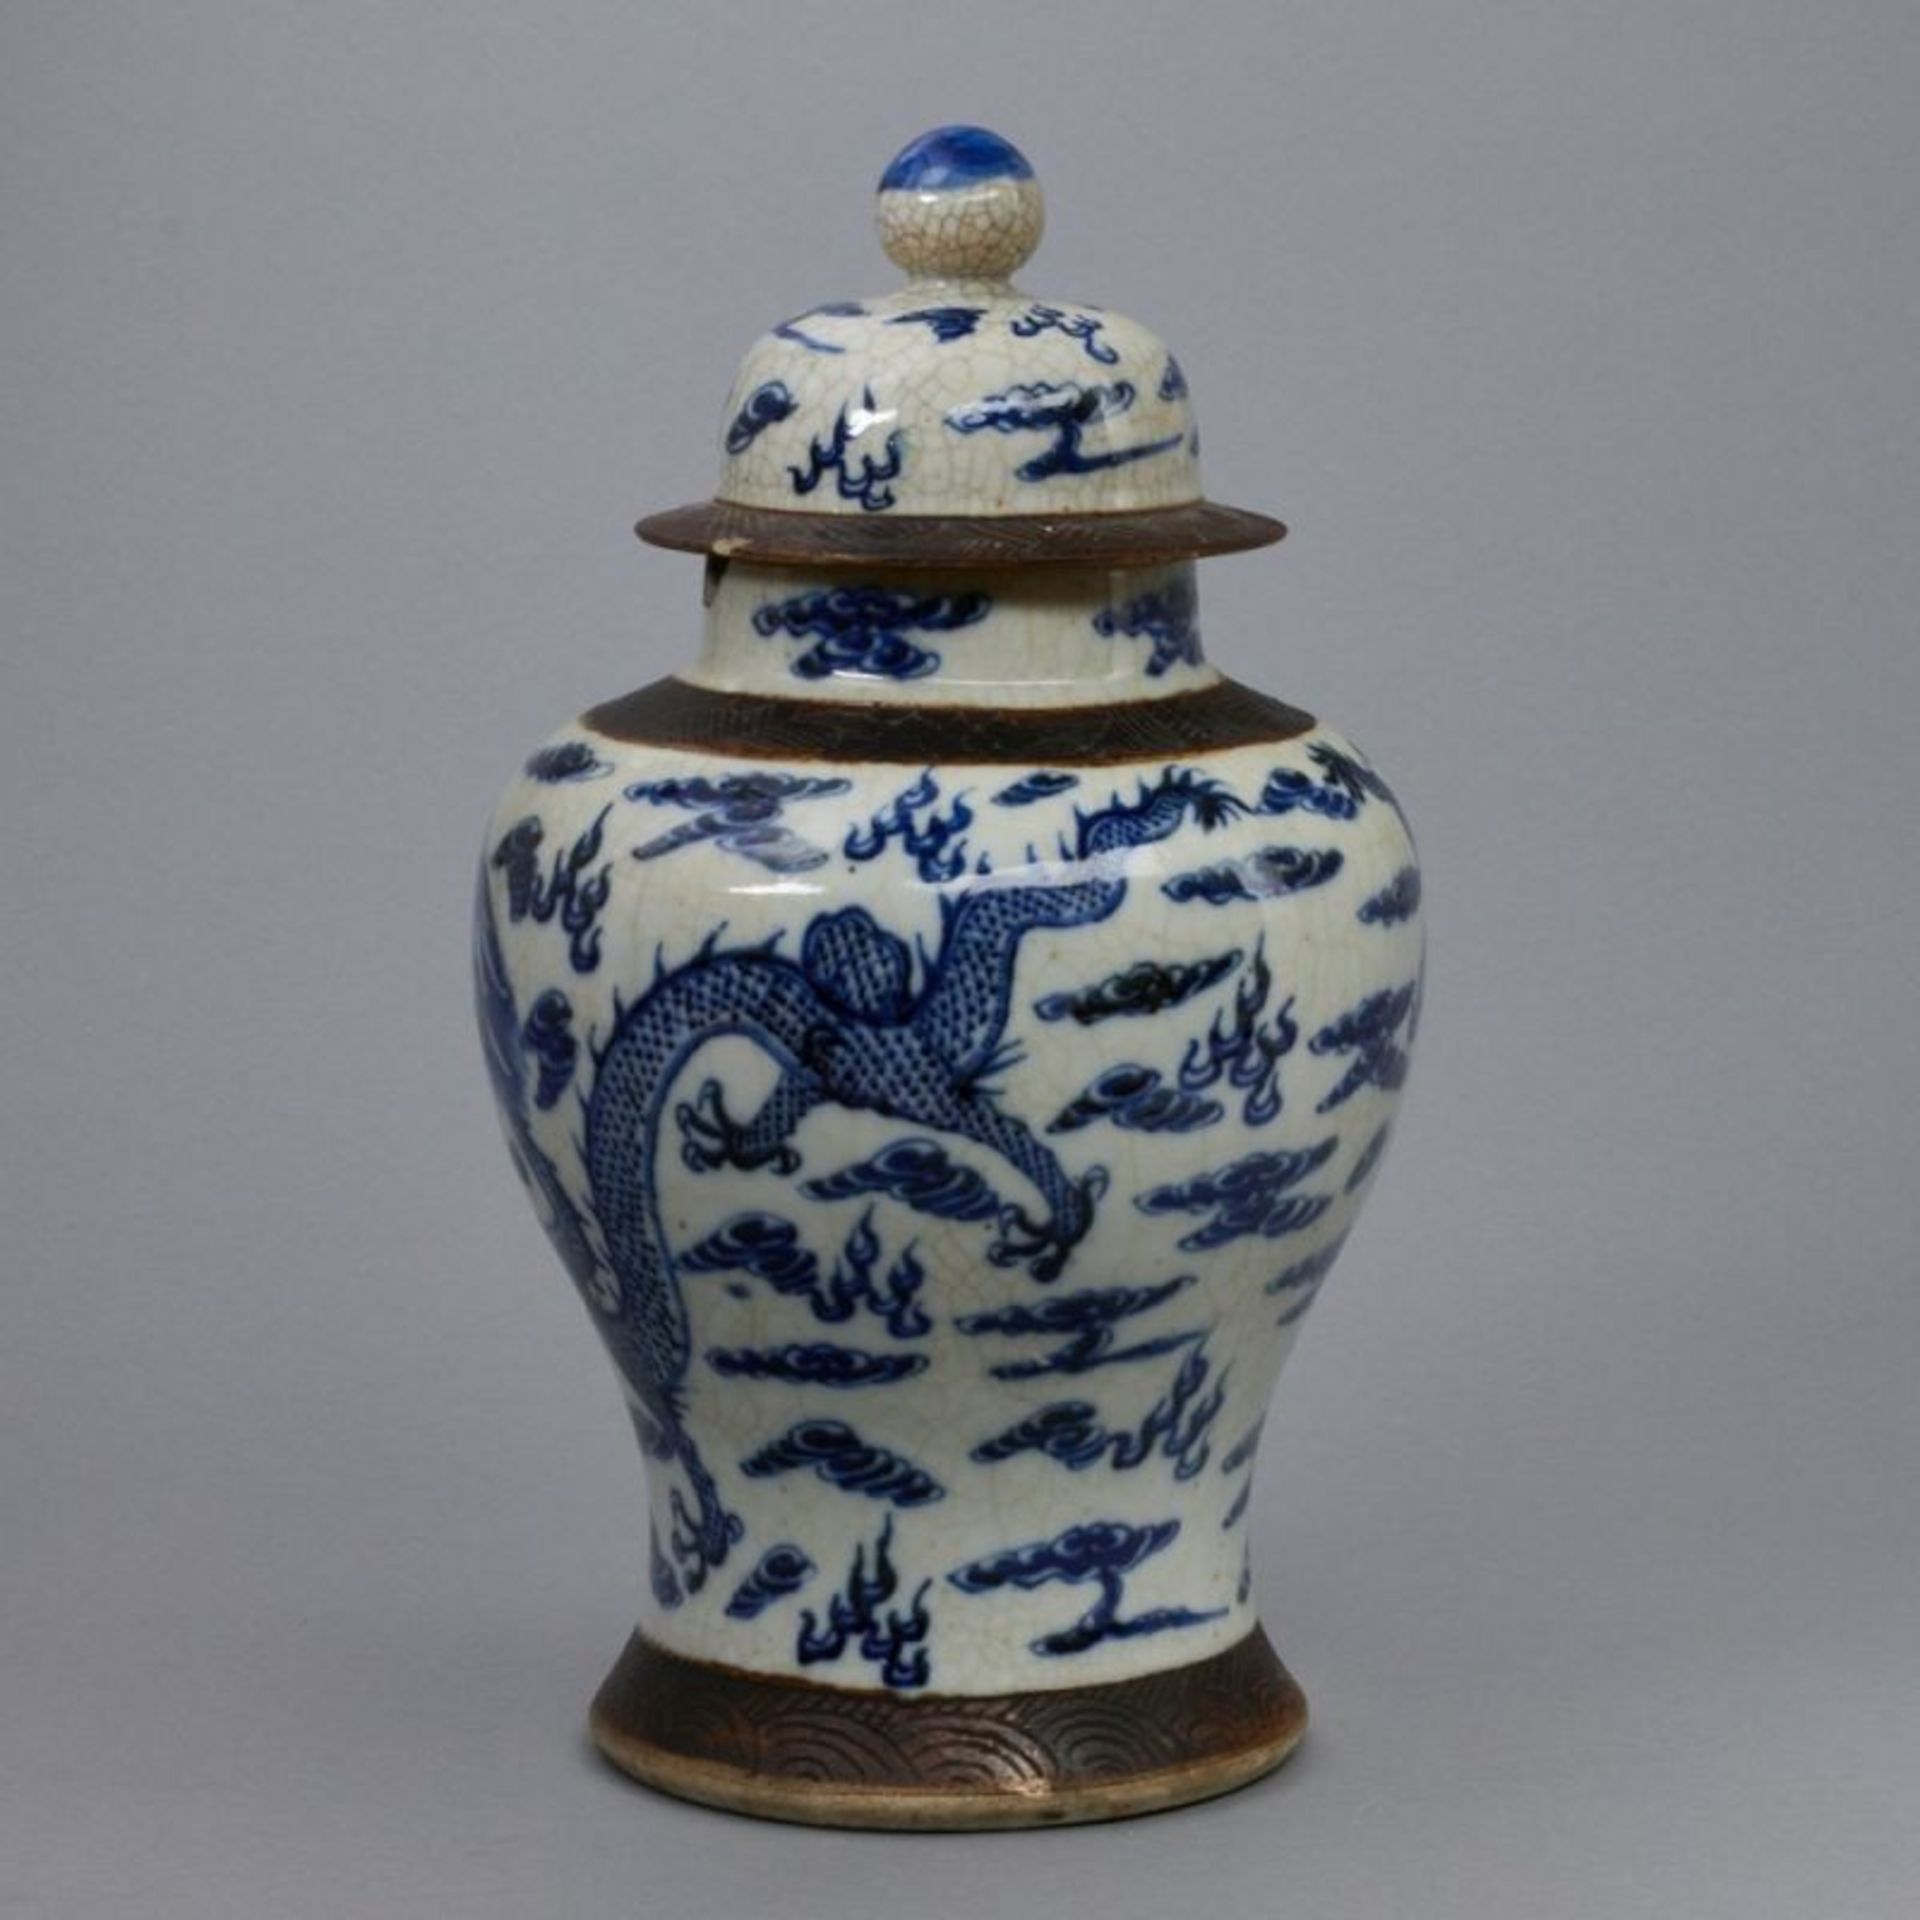 Deckelvase, China, Qing Dynastie, um 1800 - Image 3 of 4